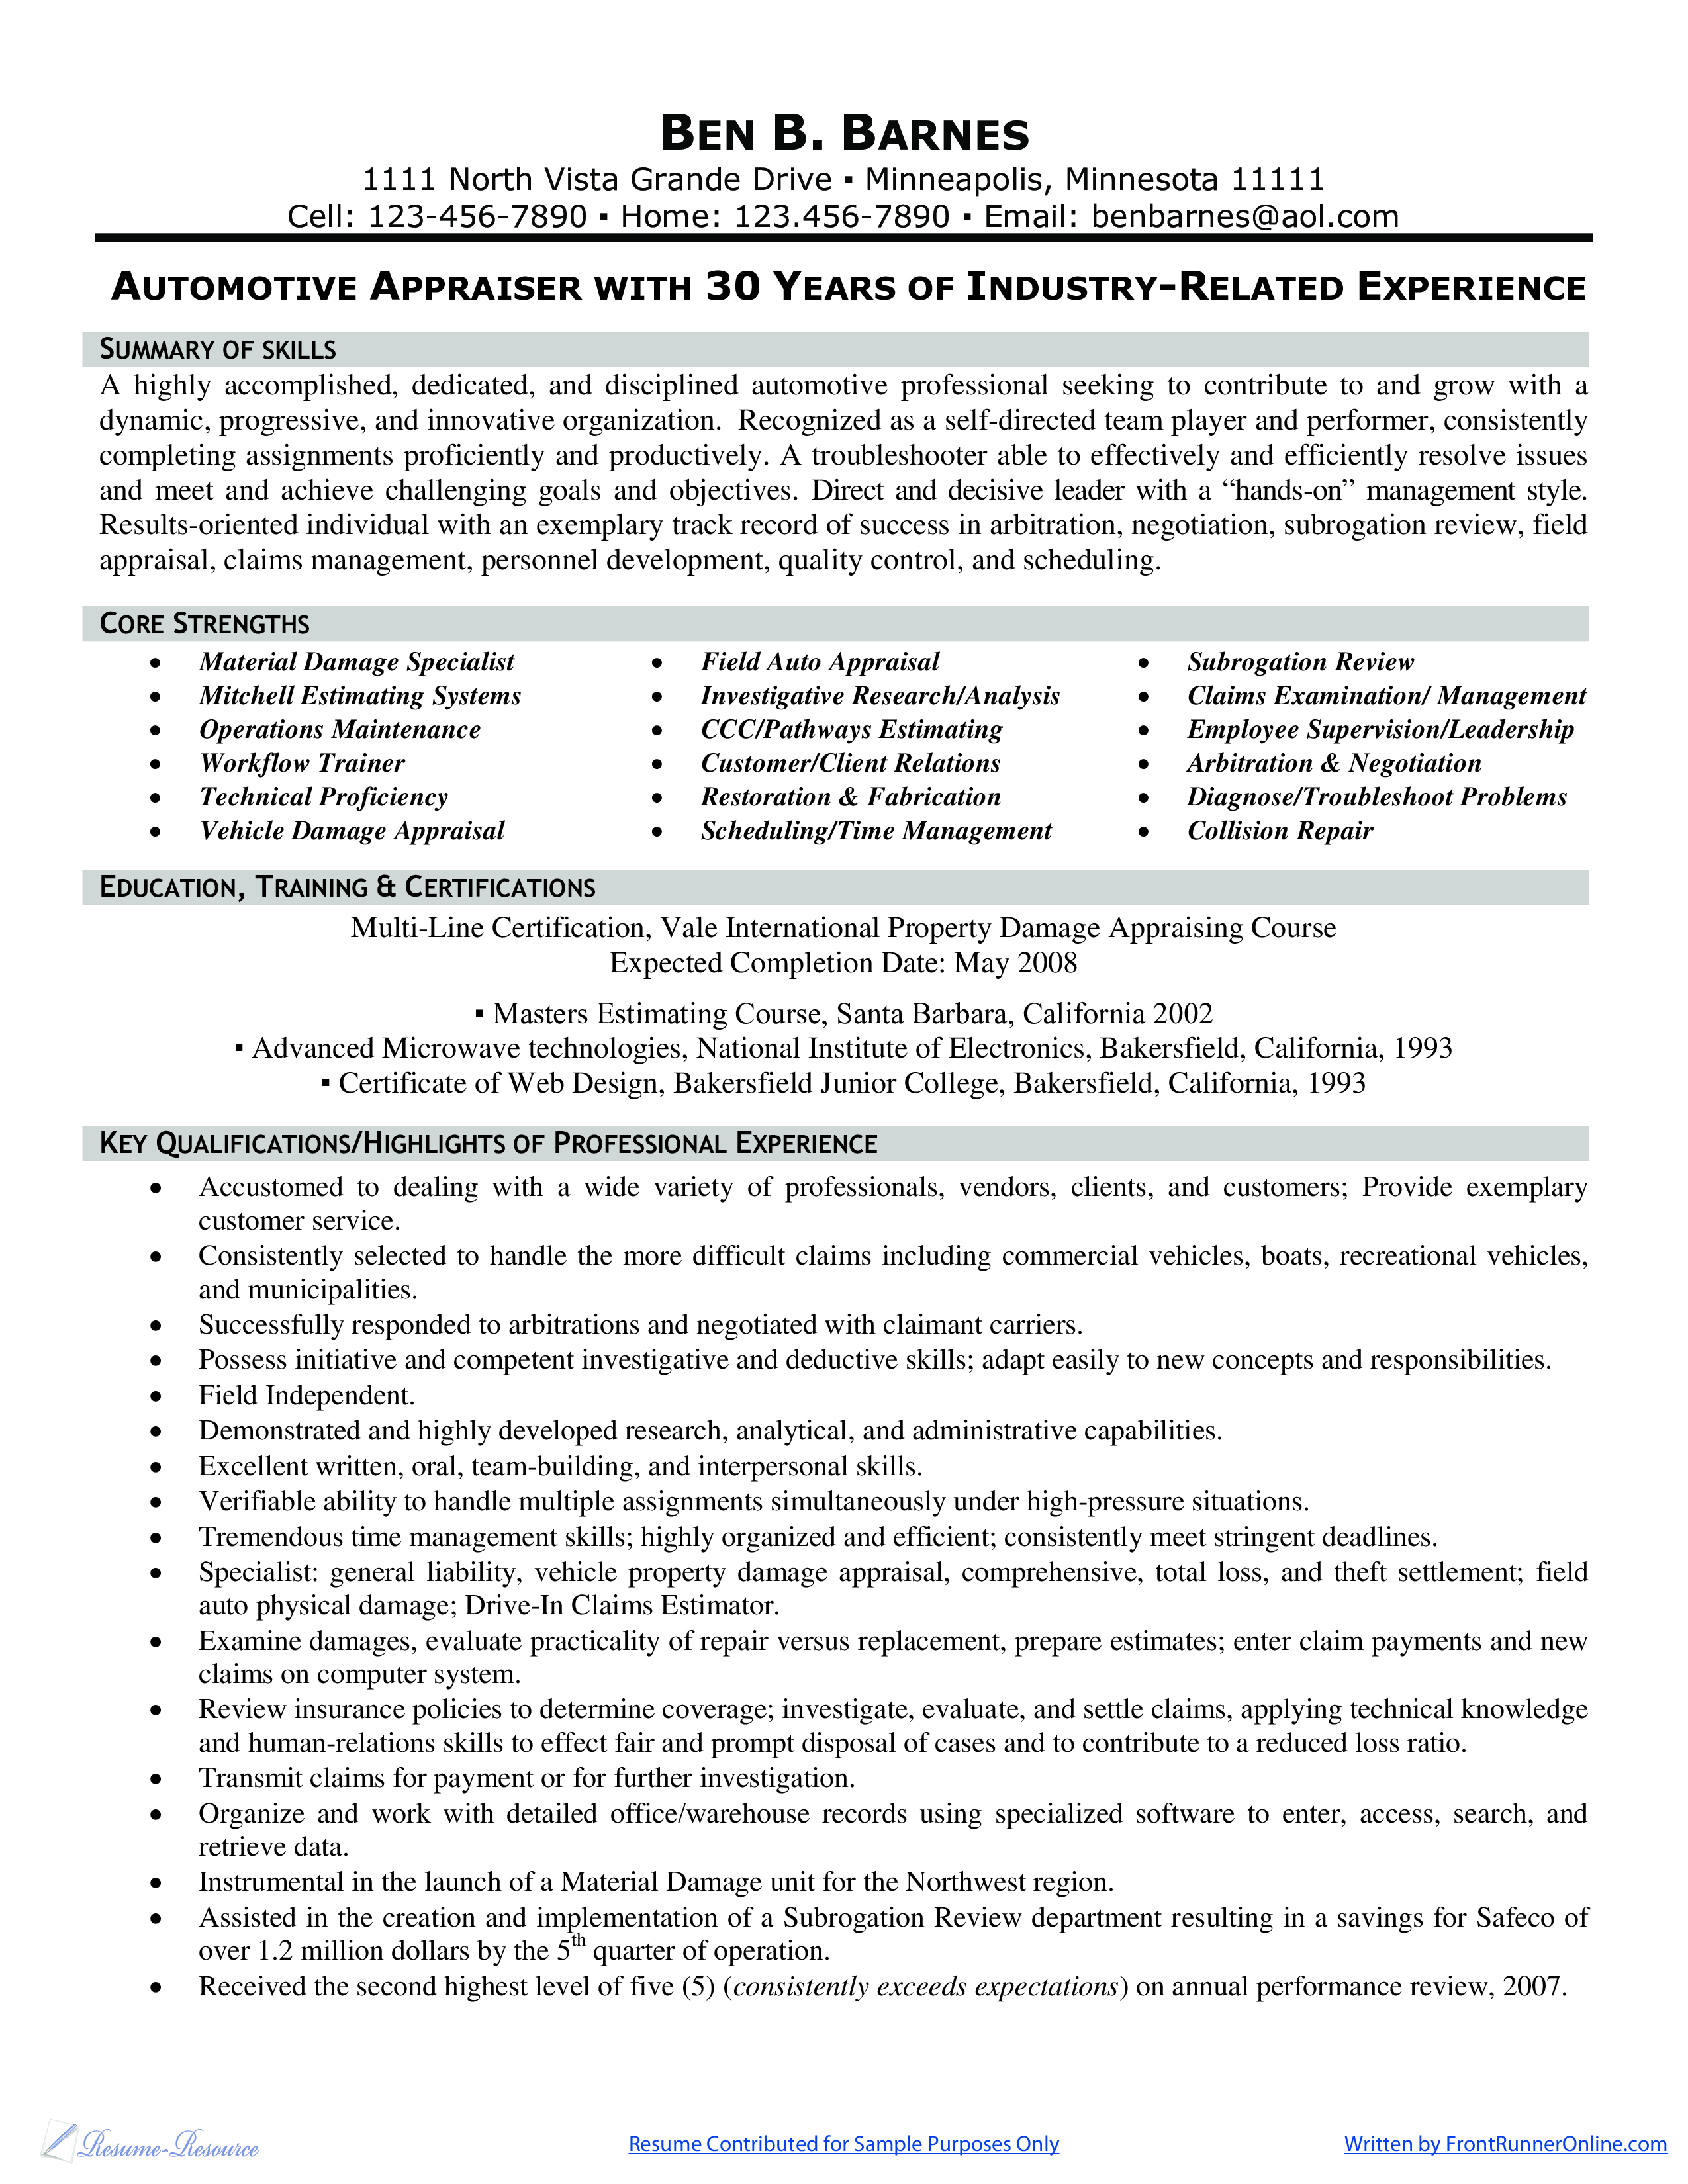 Automotive Appraiser & Adjuster Resume main image